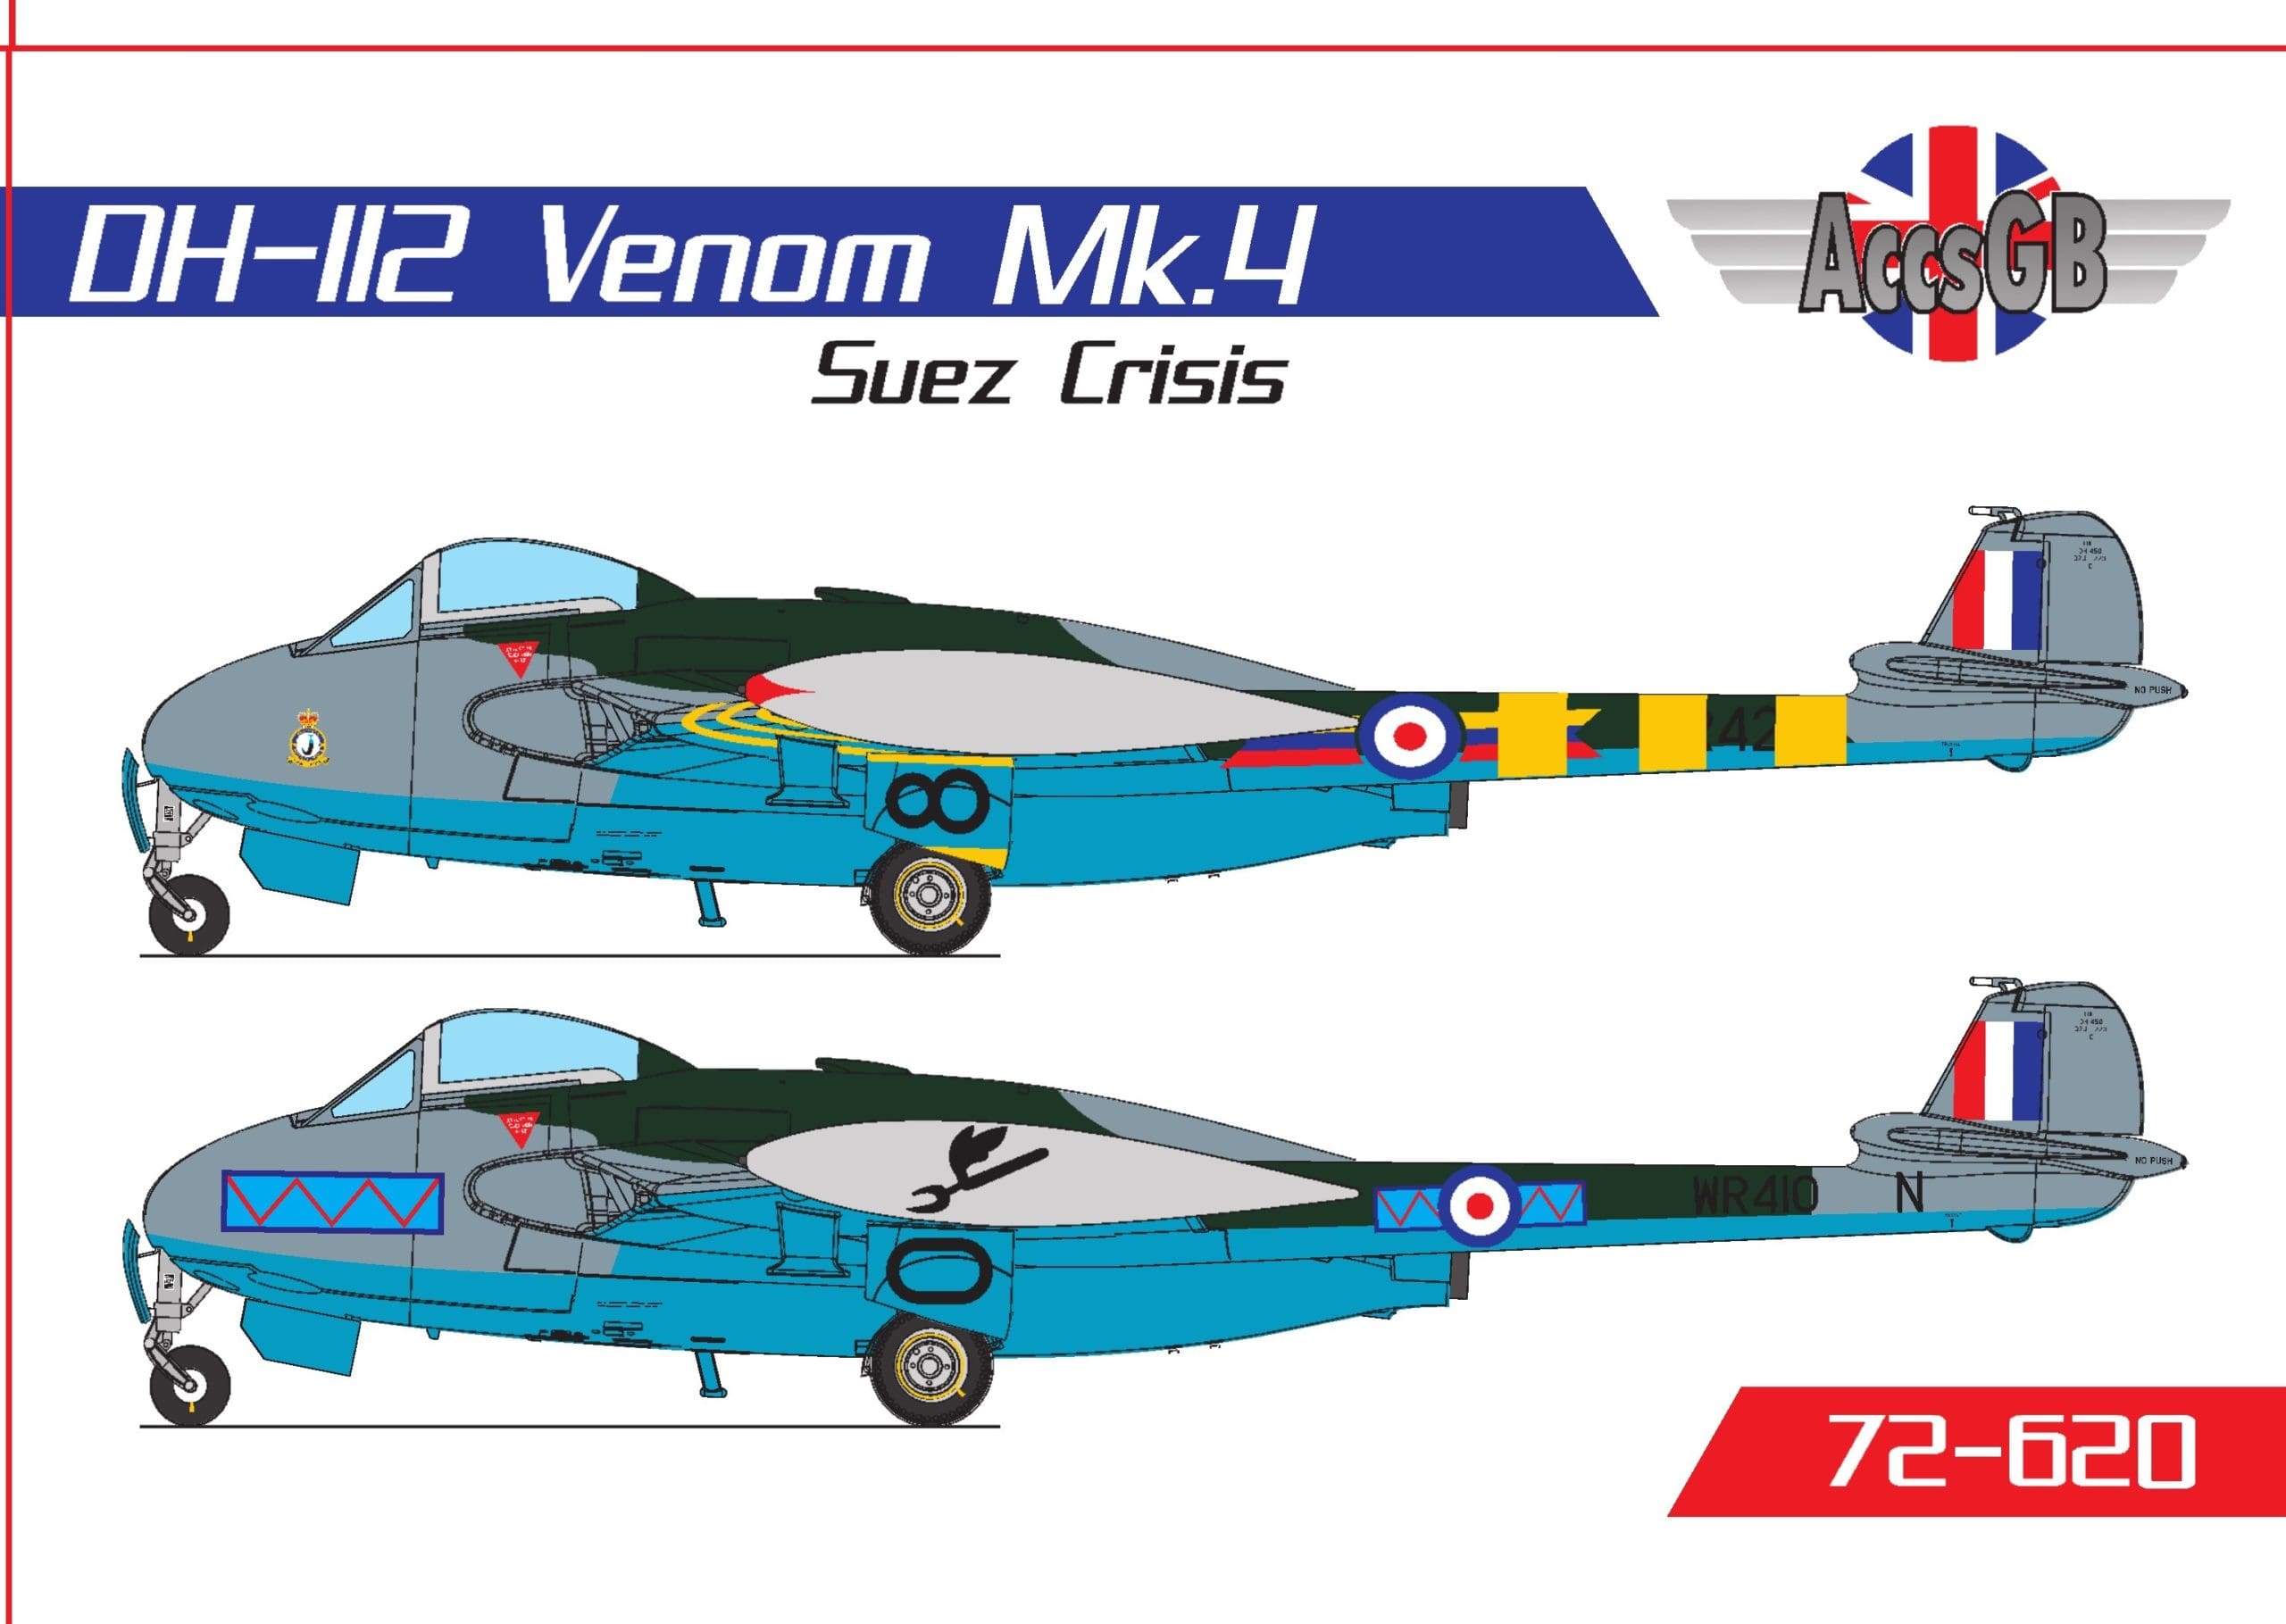 AccsGB - 72620 - DH-112 Venom Mk.4 Suez Crisis - 1/72 Scale Model